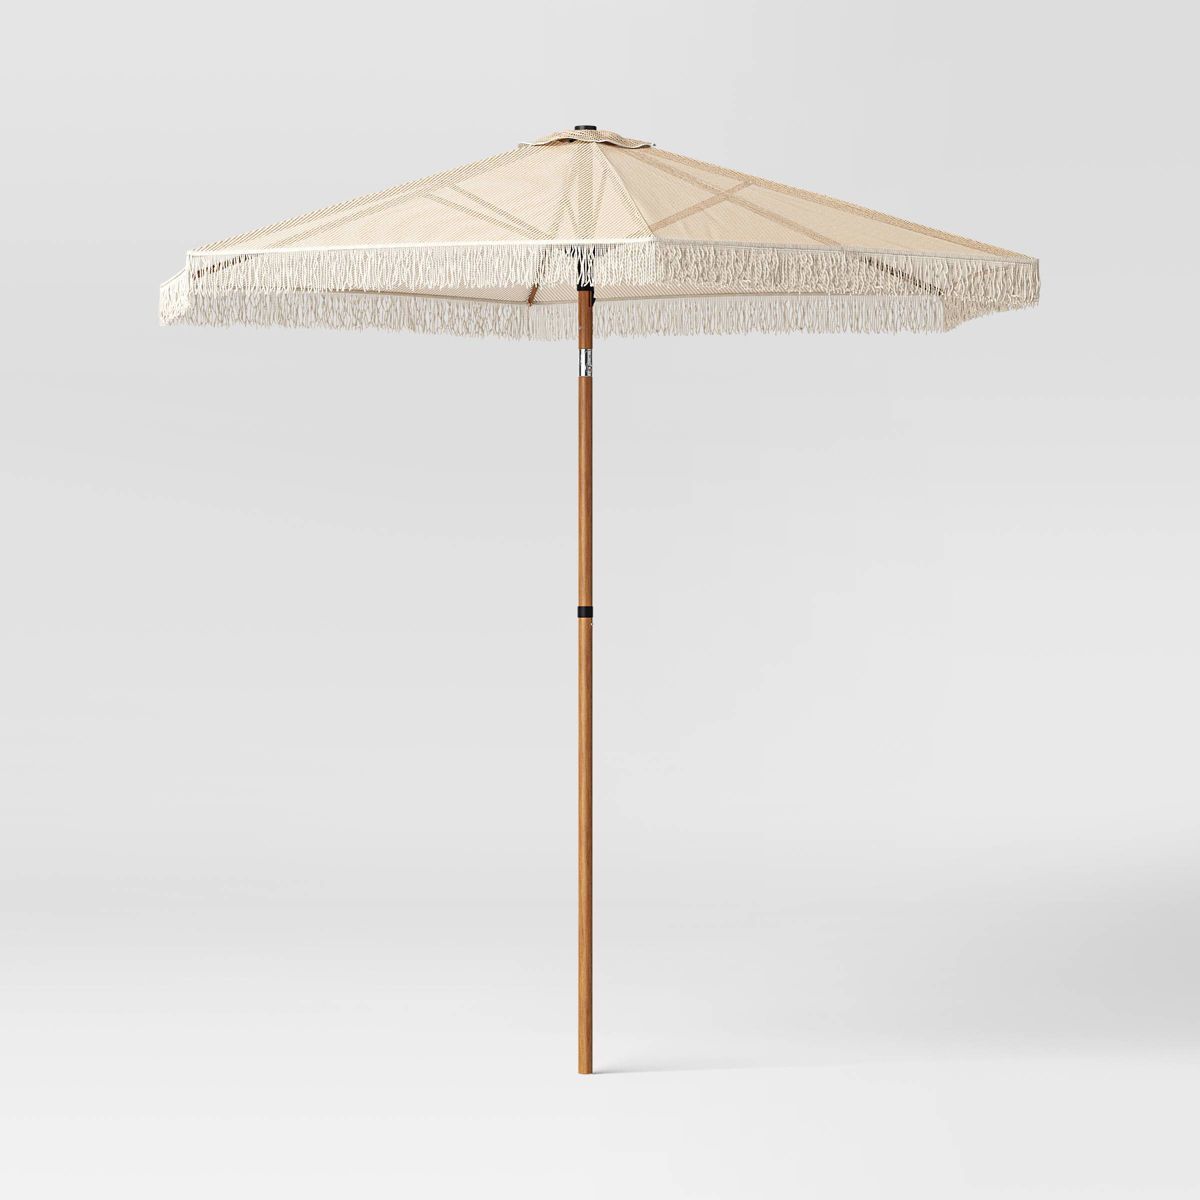 7.5' Hexagon Macrame Outdoor Patio Market Umbrella Beige with Faux Wood Pole - Threshold™ | Target